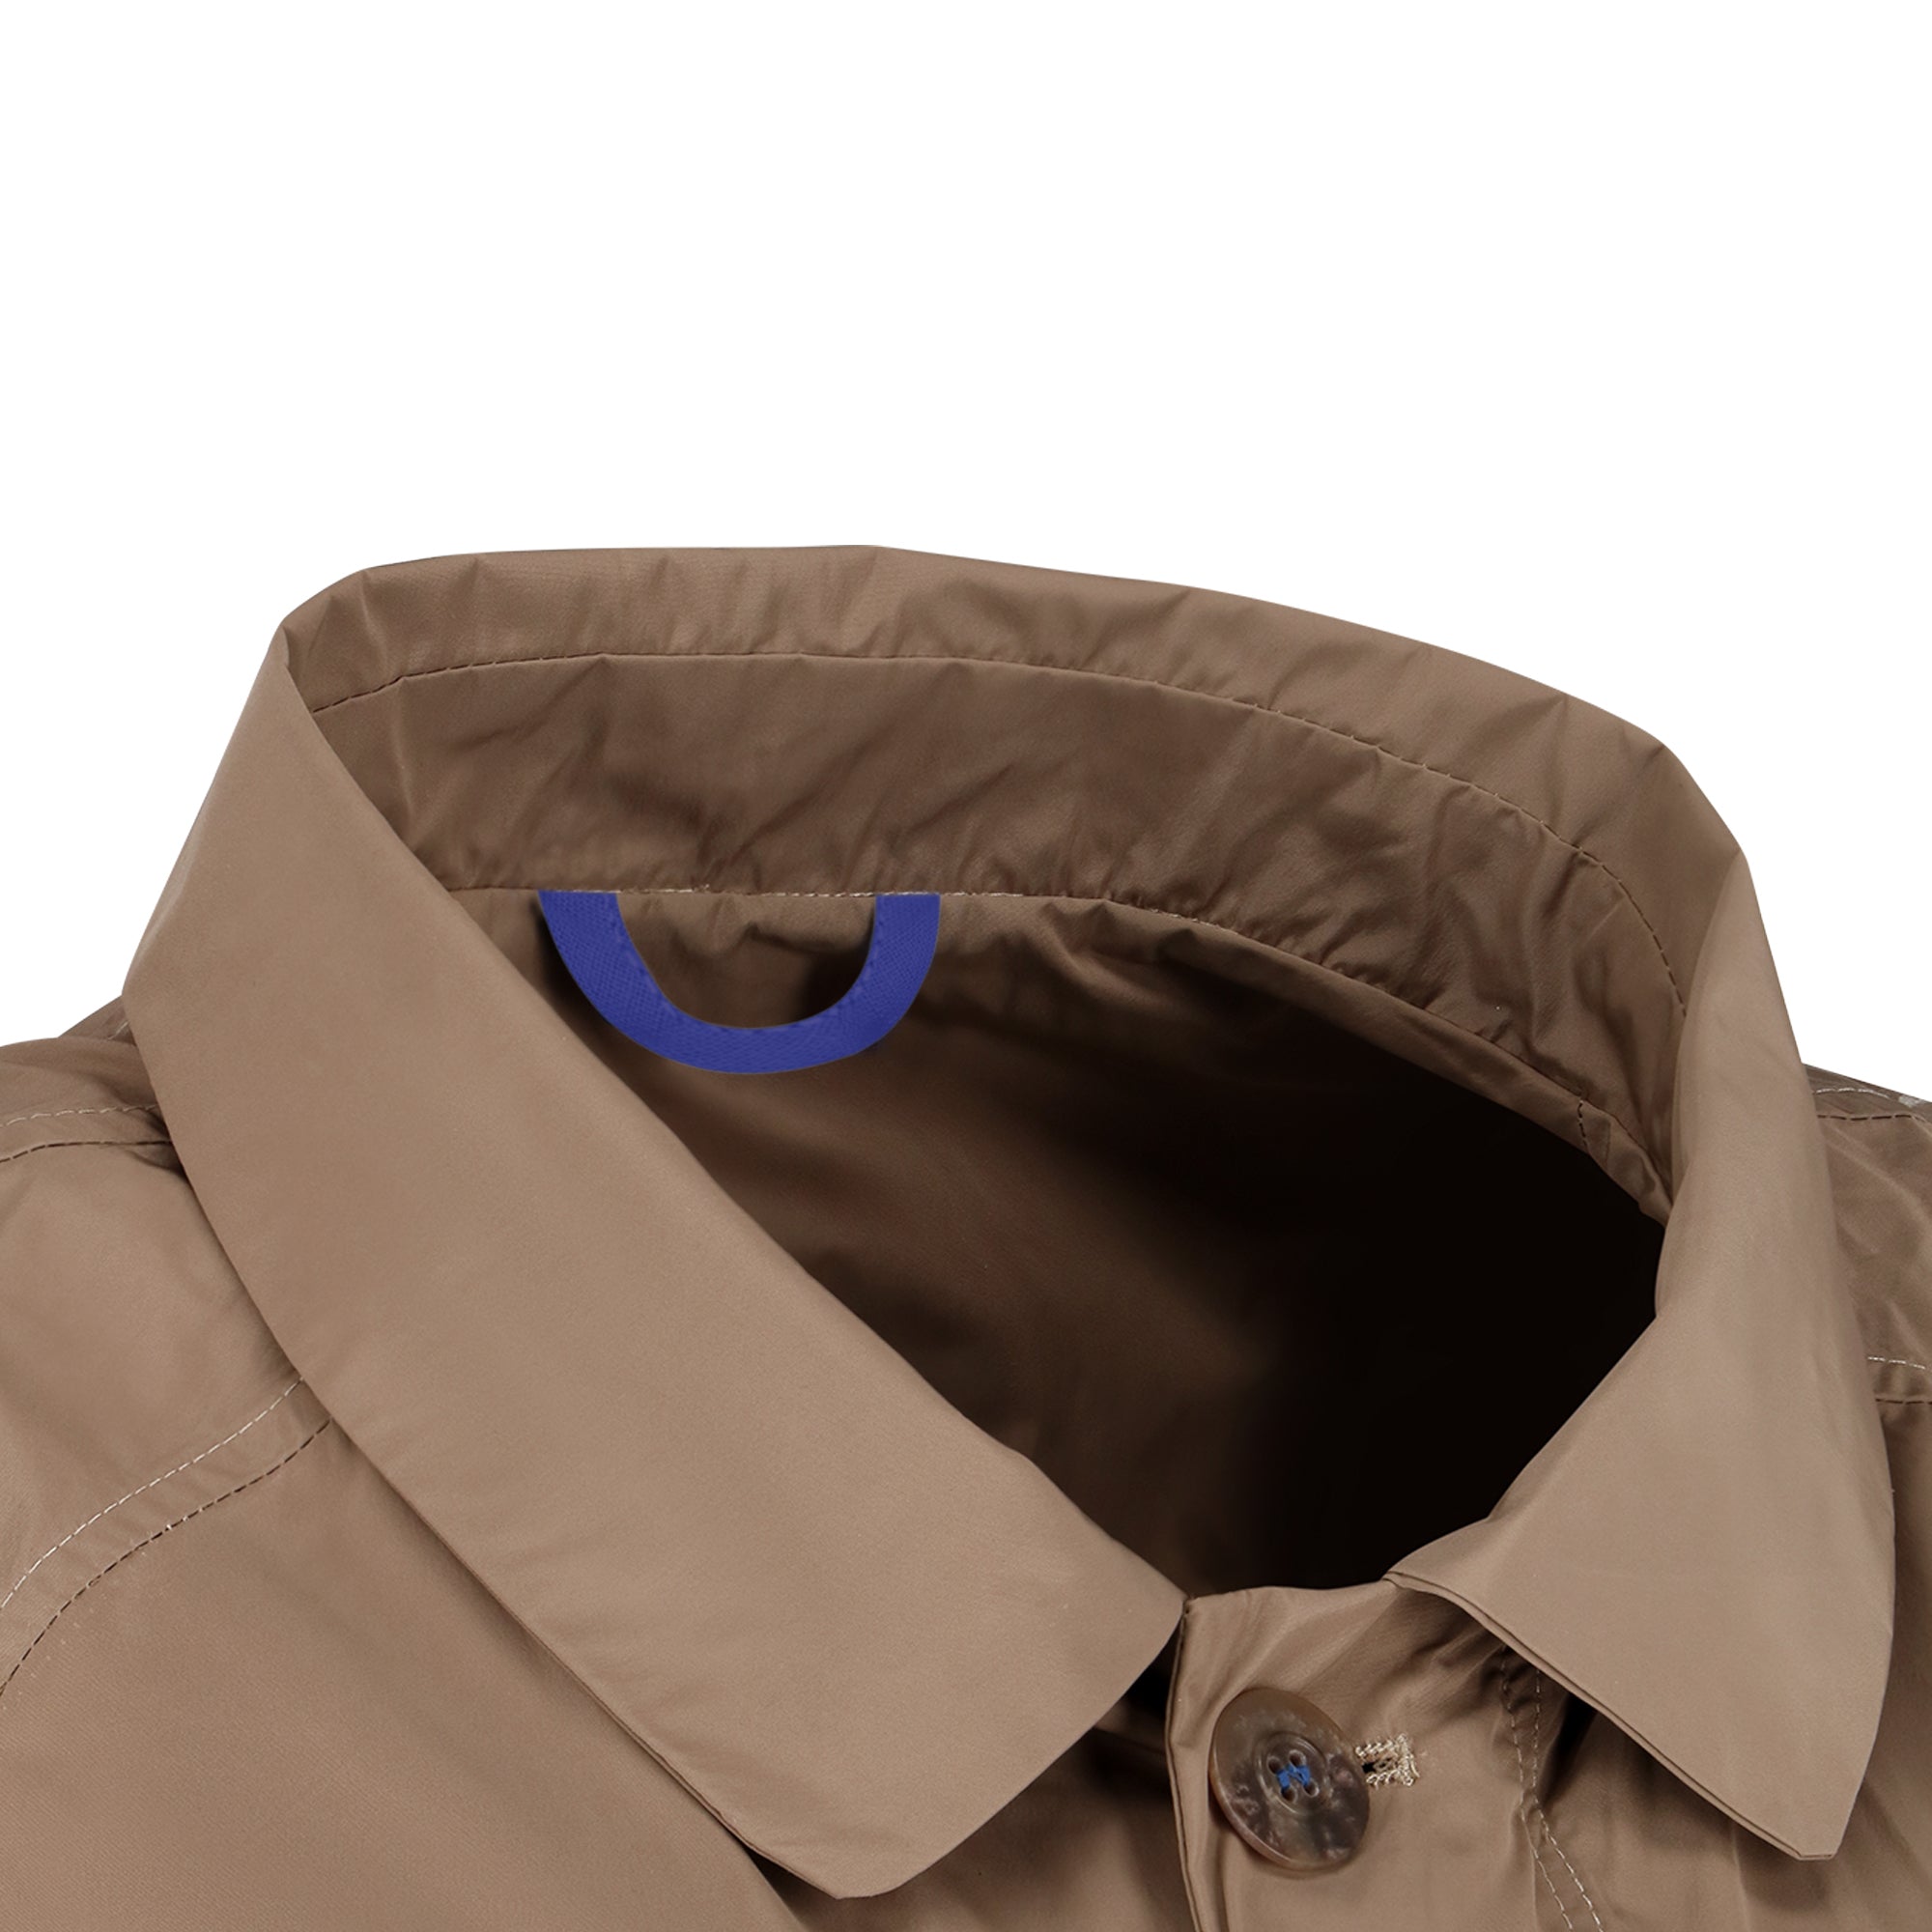 Strato men's raincoat - sand color - neckline detail